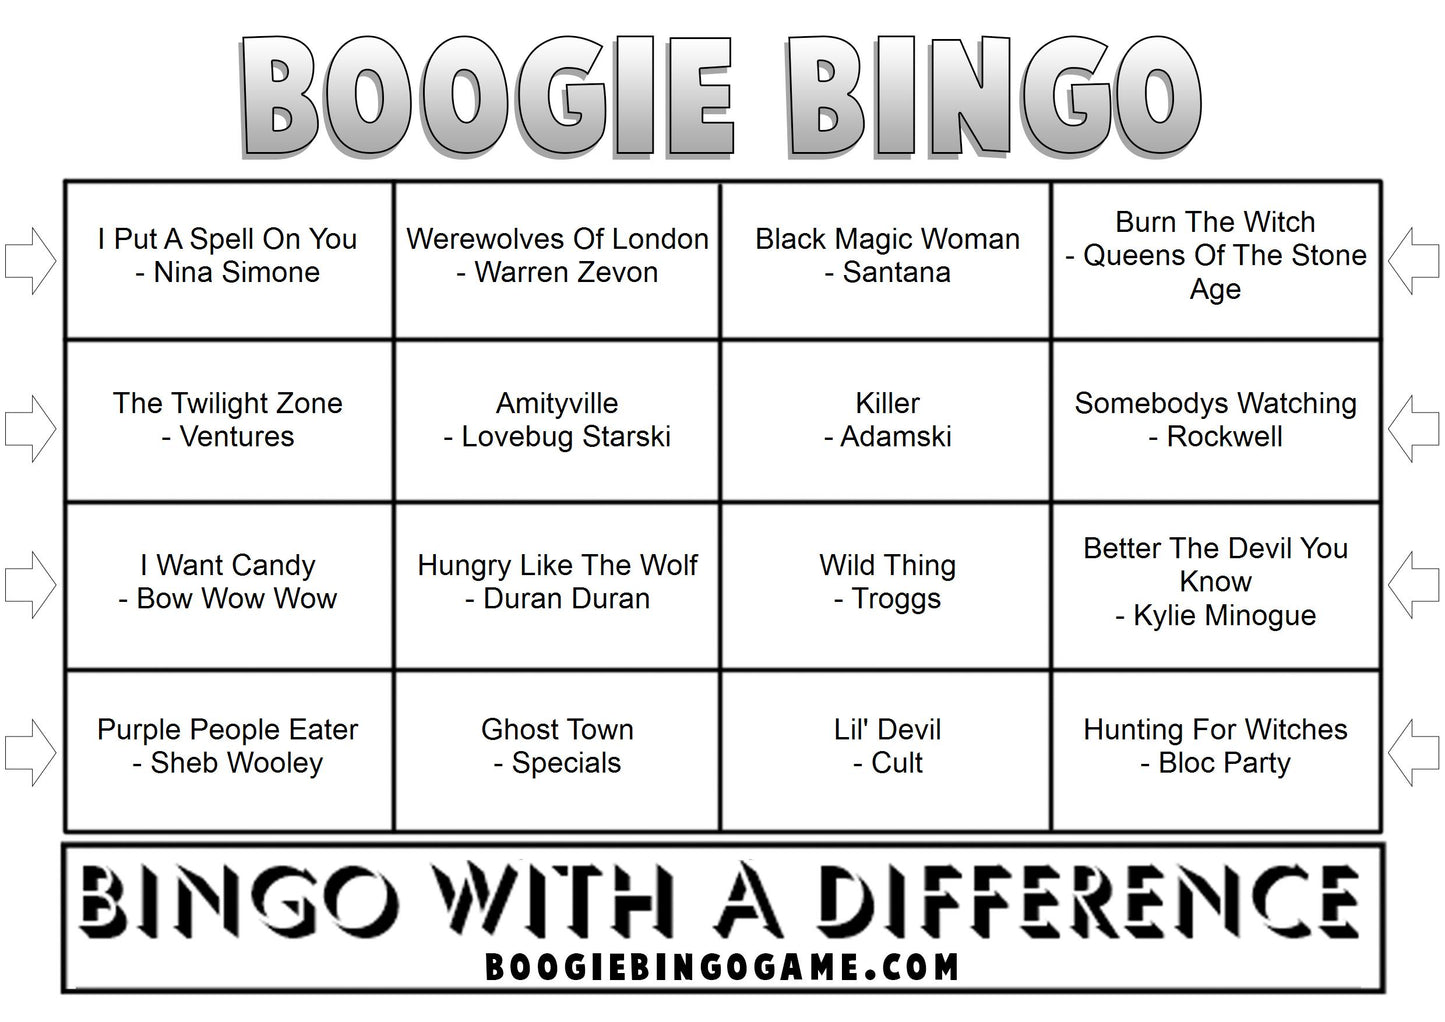 Game 23 | Halloween | Boogie Bingo | Printed Music Bingo Tickets